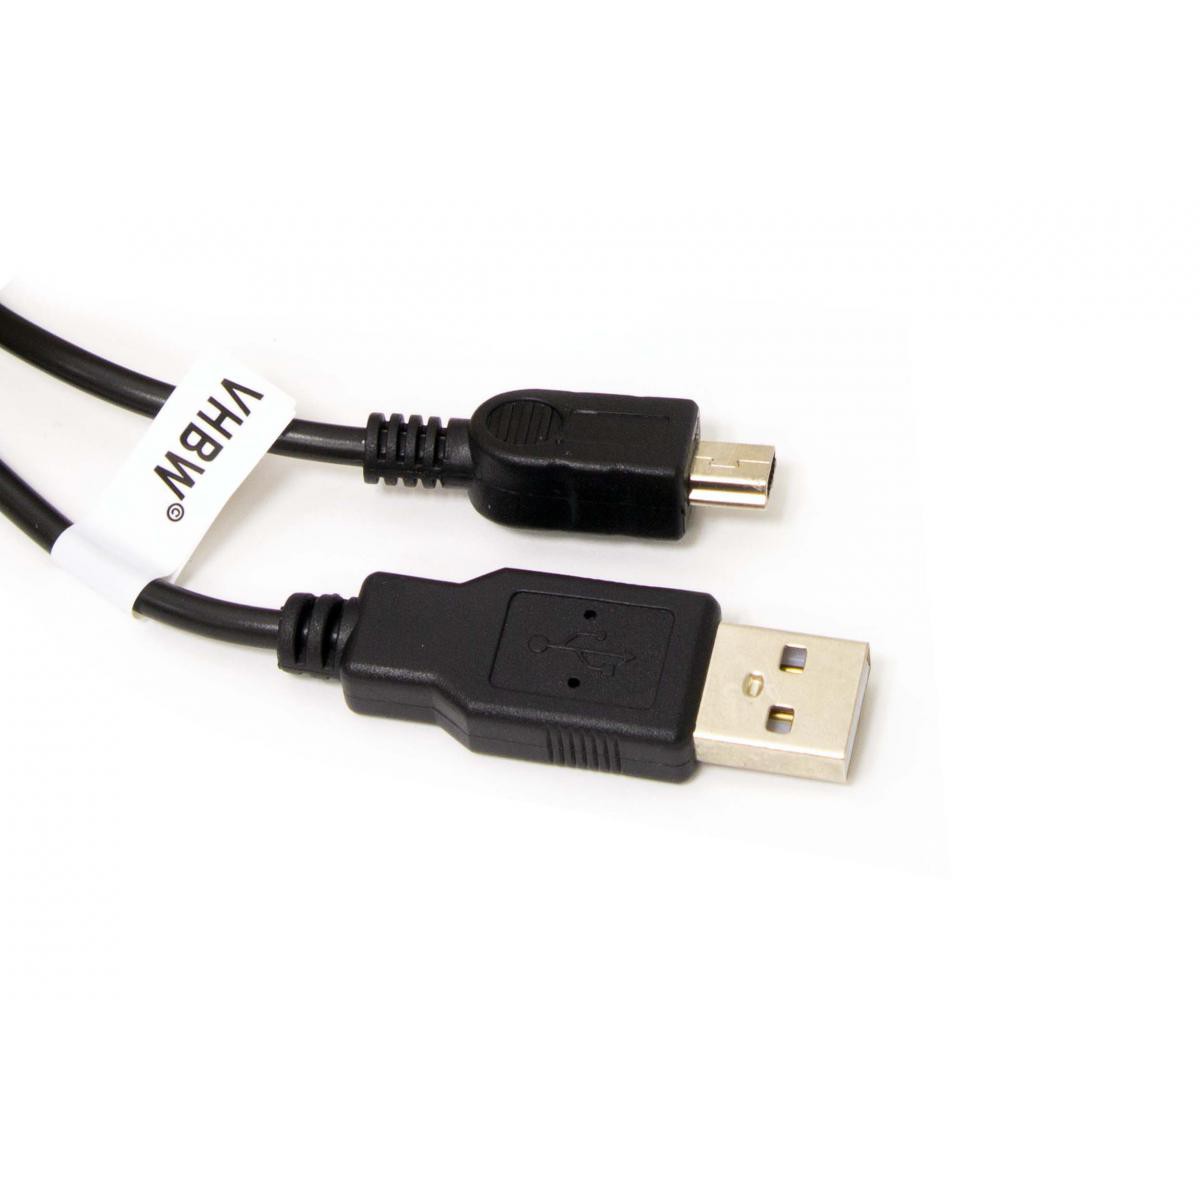 Vhbw - Câble USB A-Mini-B 5 pôles noir/black longueur 1m pr TOSHIBA Camileo X100, H10, H20, H30, P10, P20, P30, P100, S10, S20, S30, V10, HD-A3, SX500, SX900 - Câble antenne